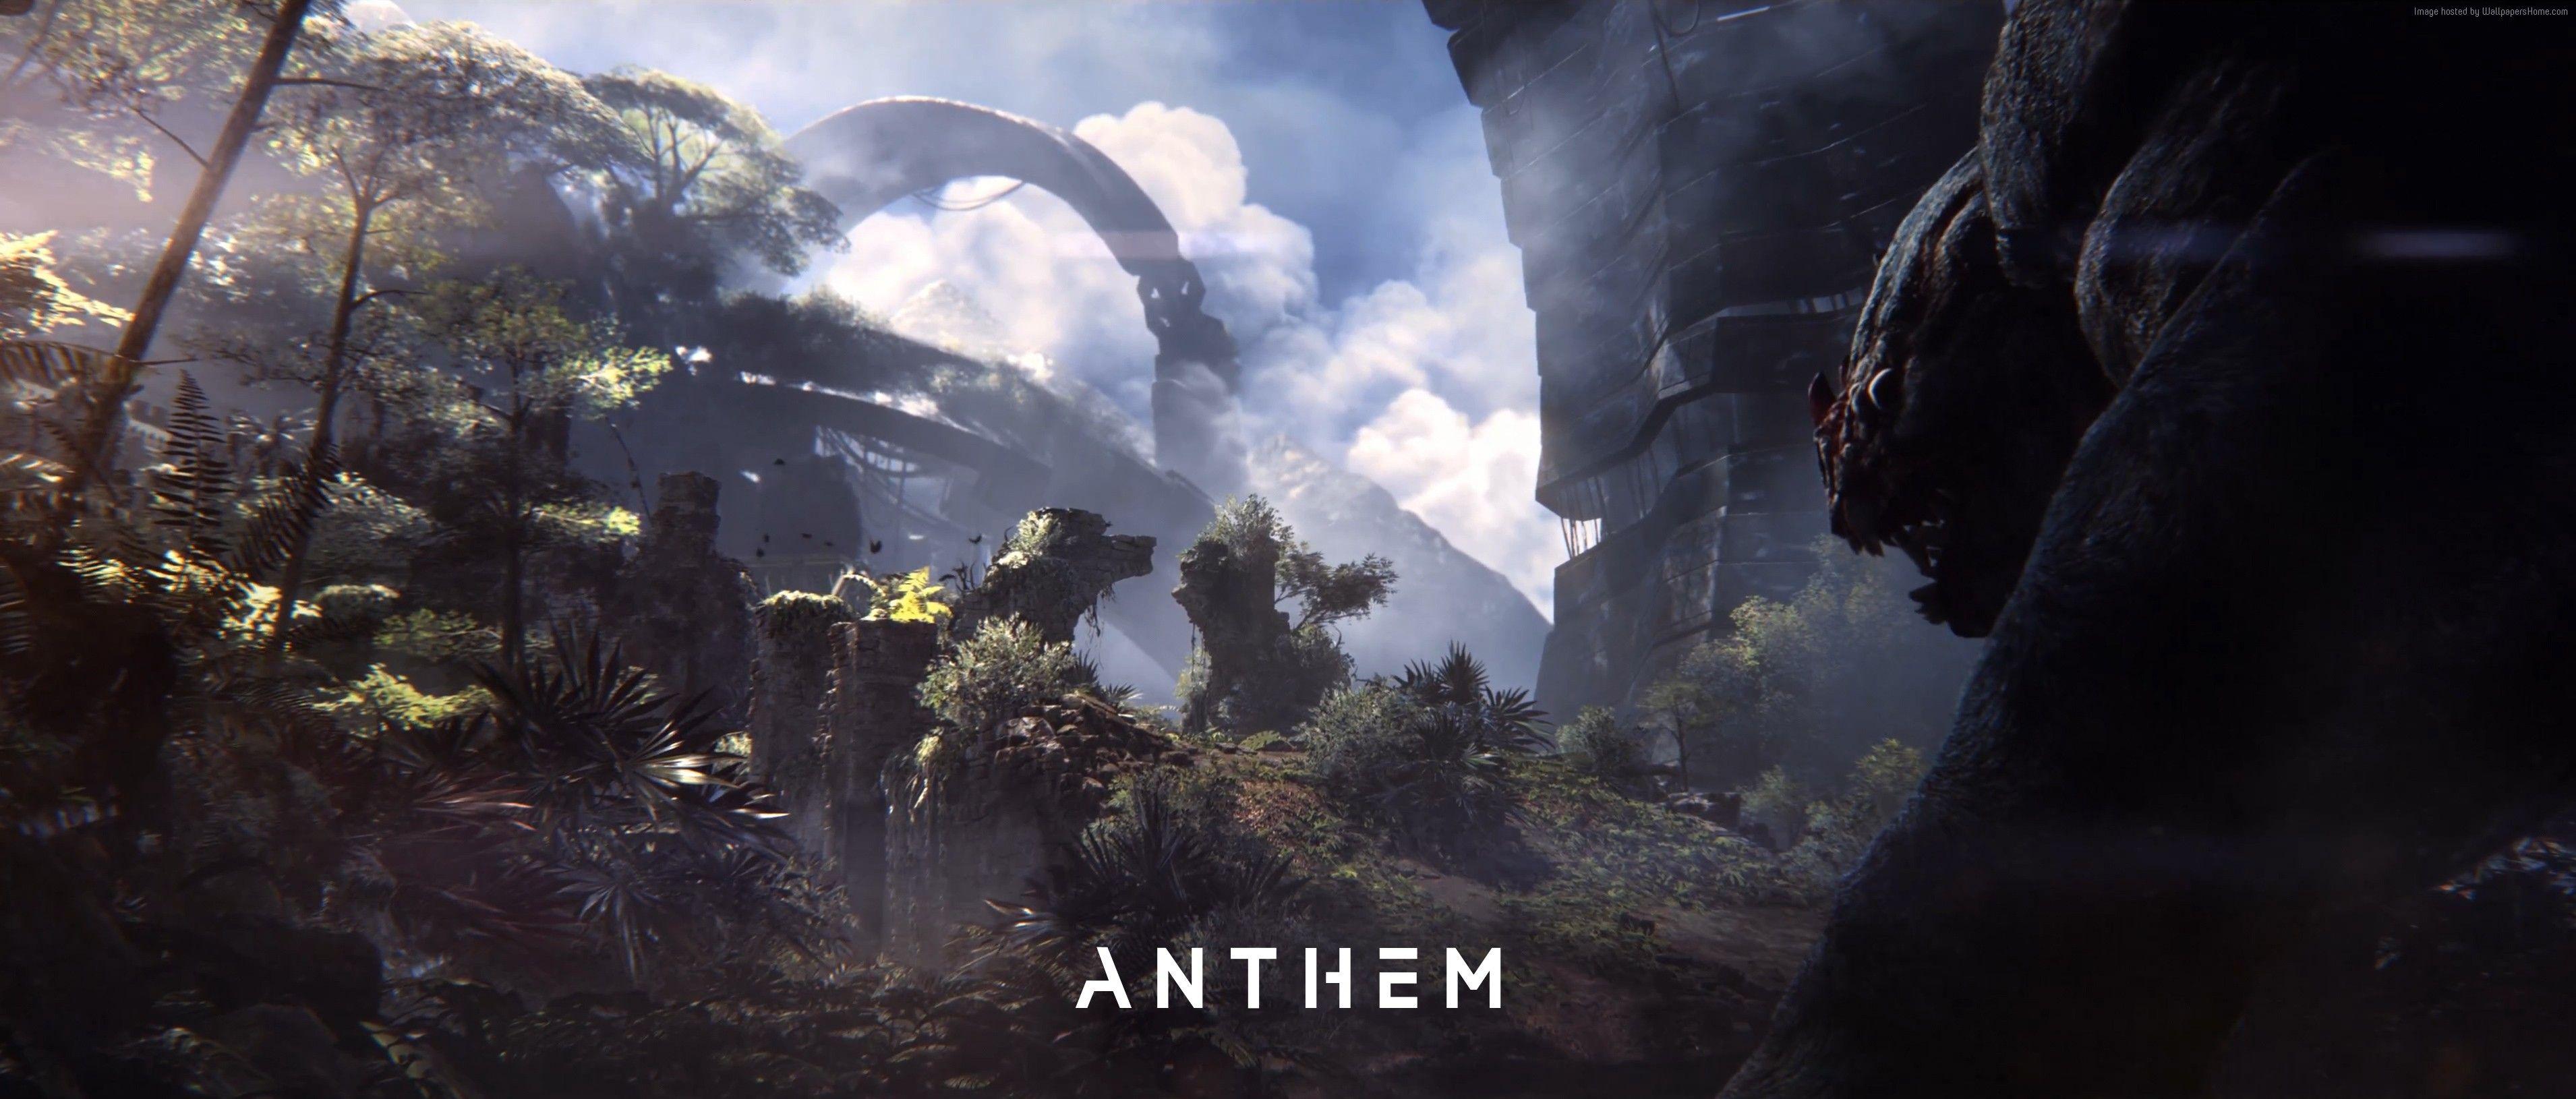 Wallpaper Anthem, 4k, screenshot, gameplay, E3 Games